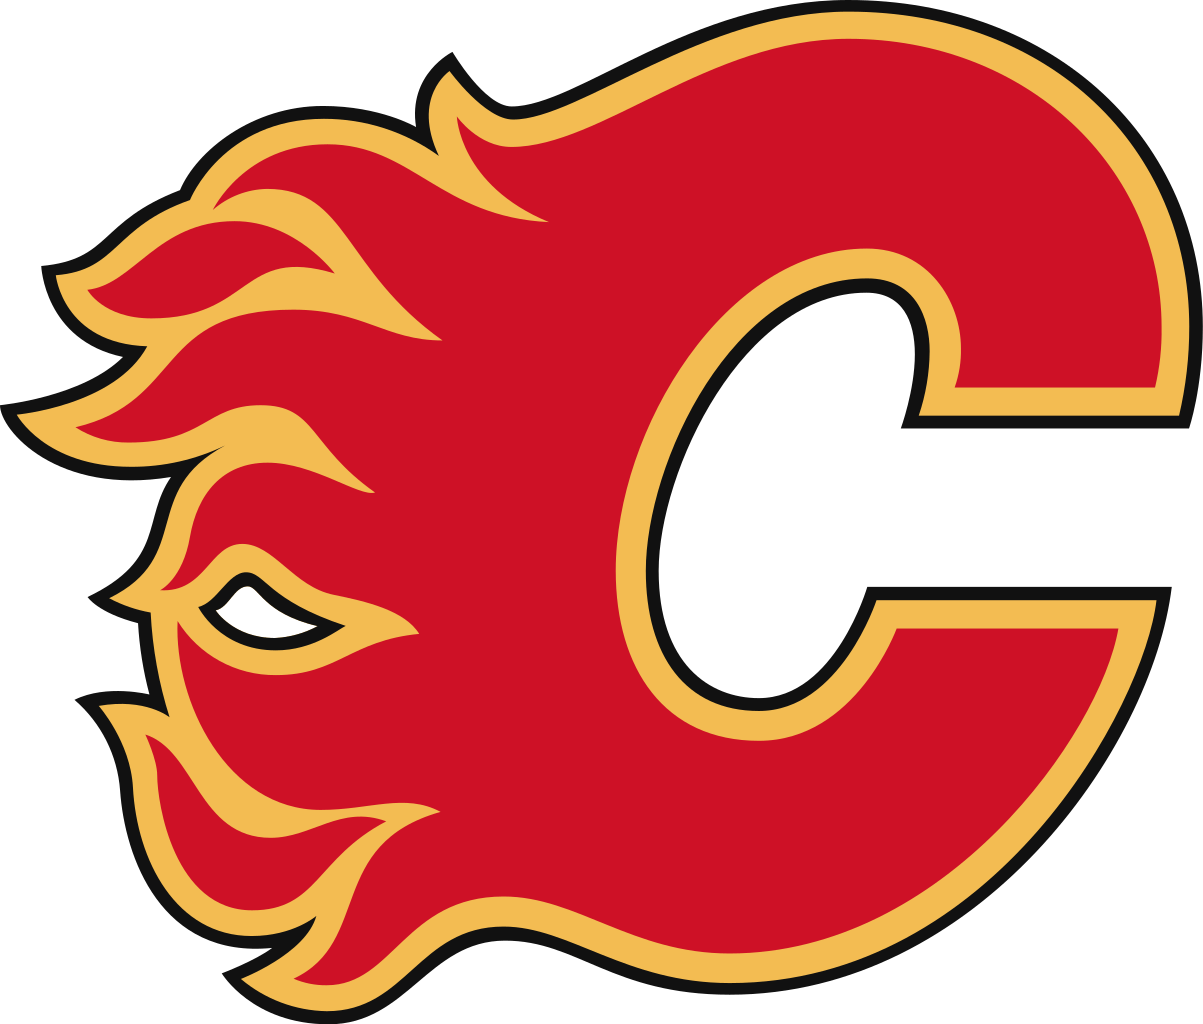  Calgary Flames logo